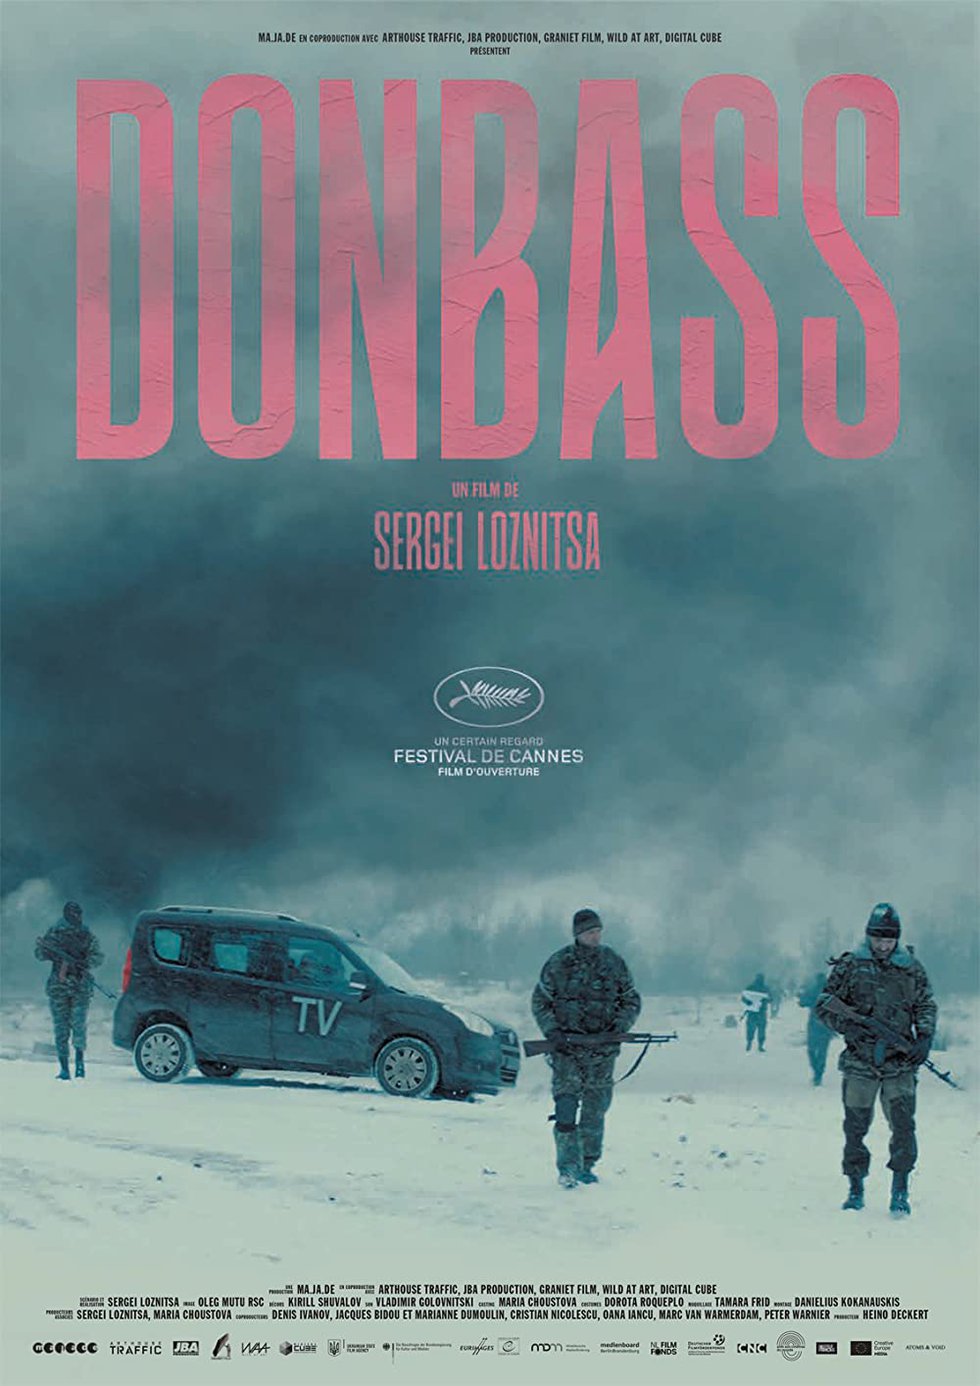 Donbass Poster